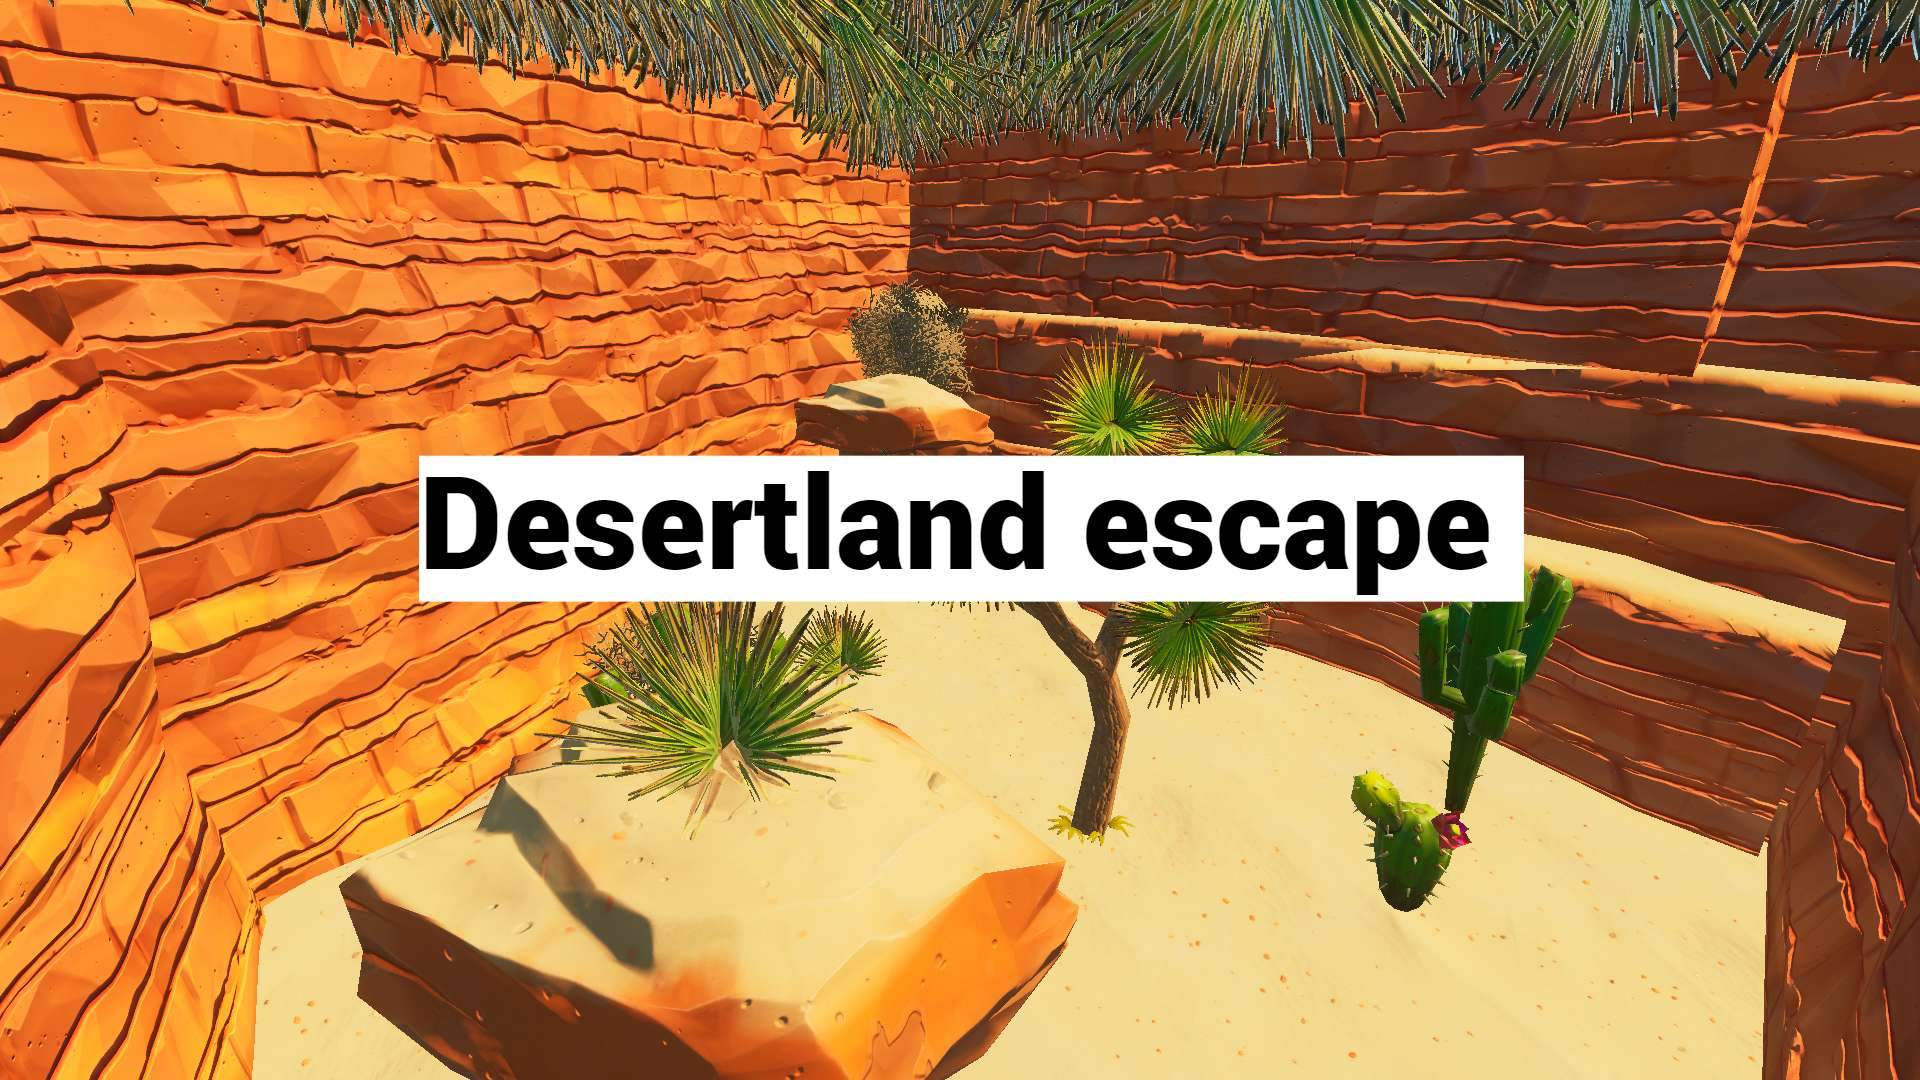 DESERT LAND ESCAPE